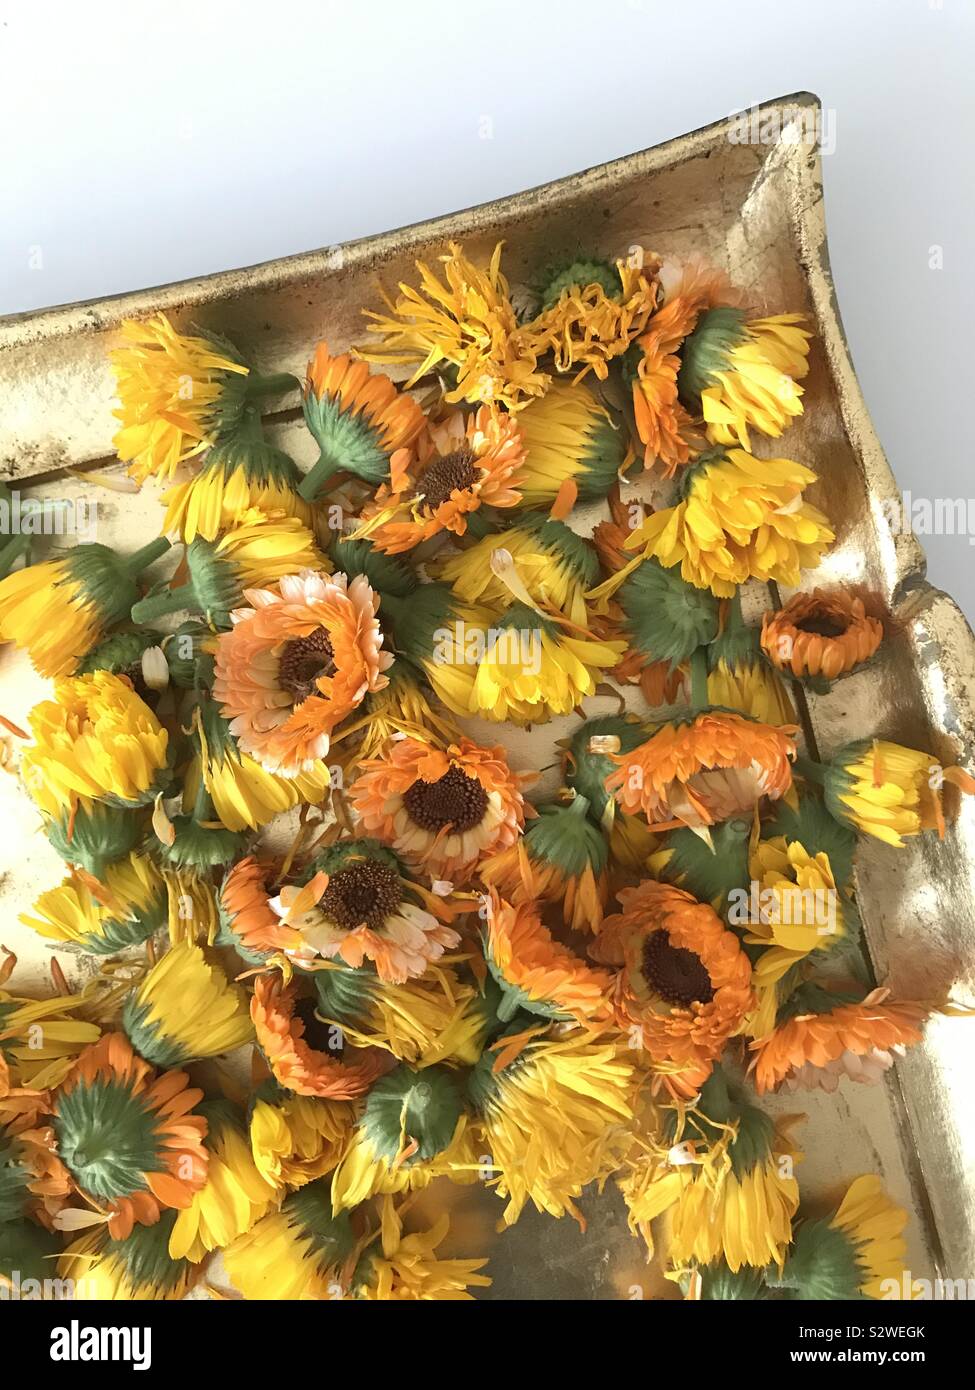 Dried marigolds calendula Stock Photo